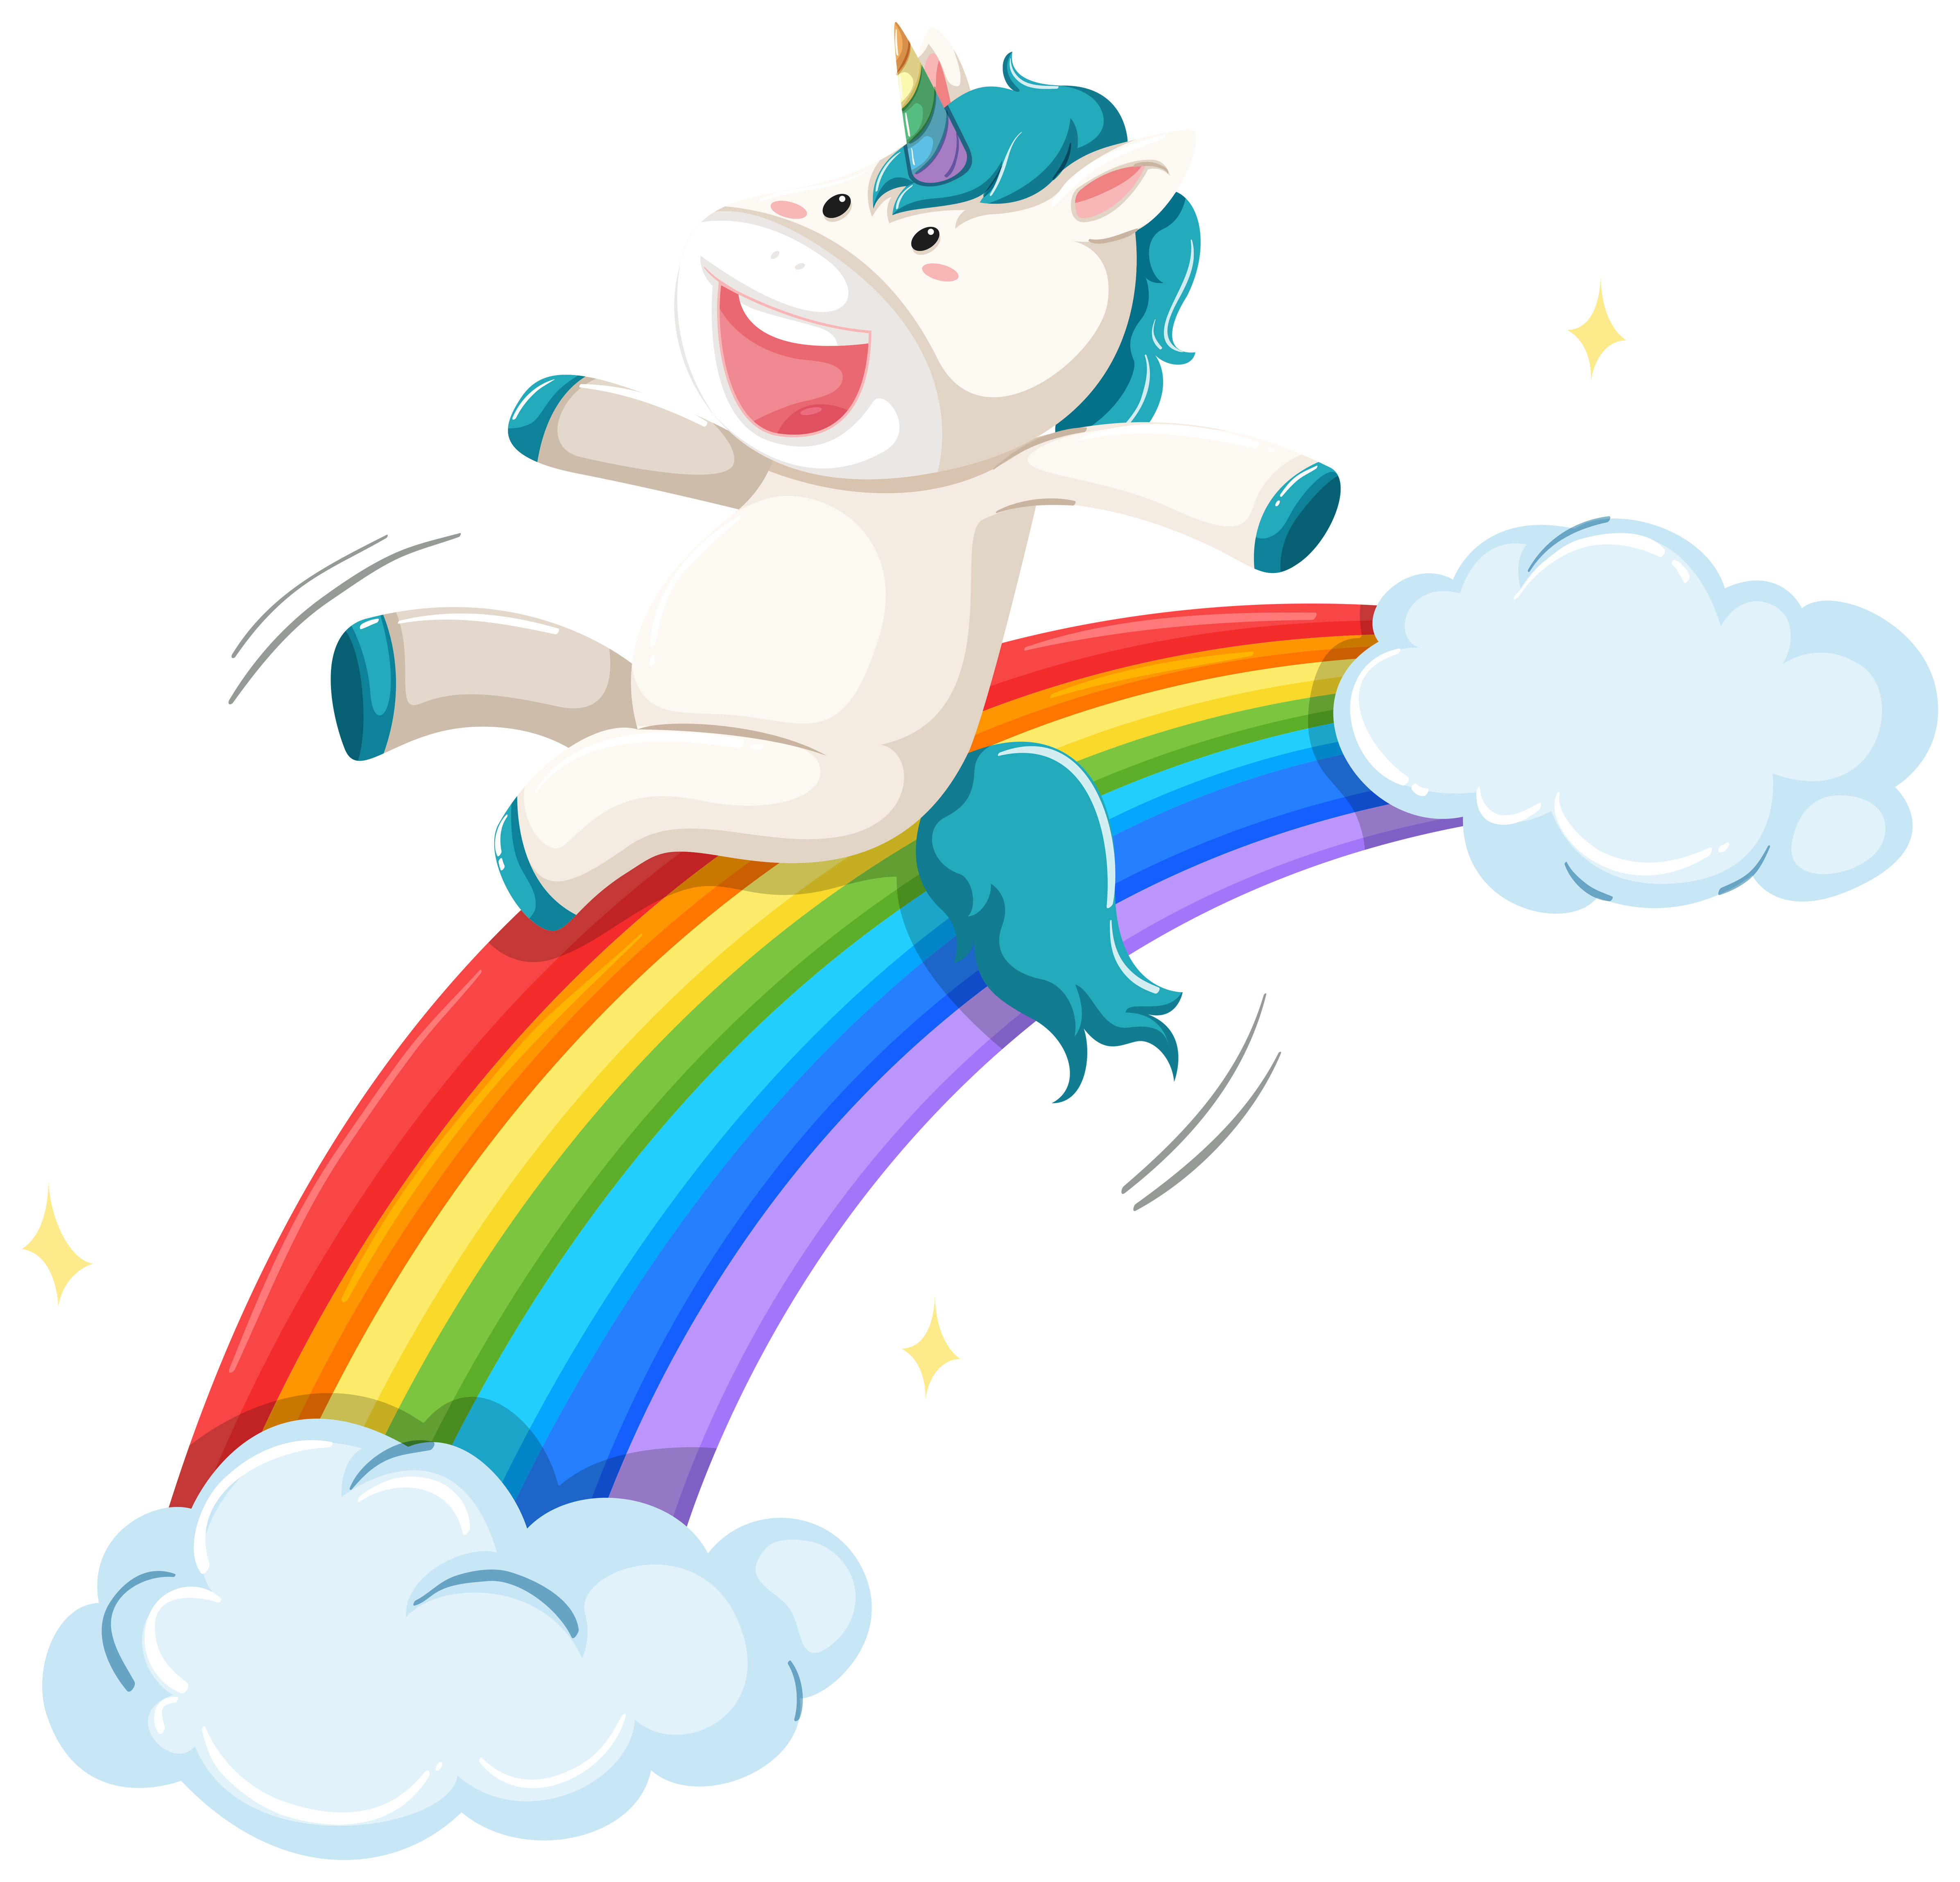 Rainbow Unicorn Free Vector Art - (1518 Free Downloads)